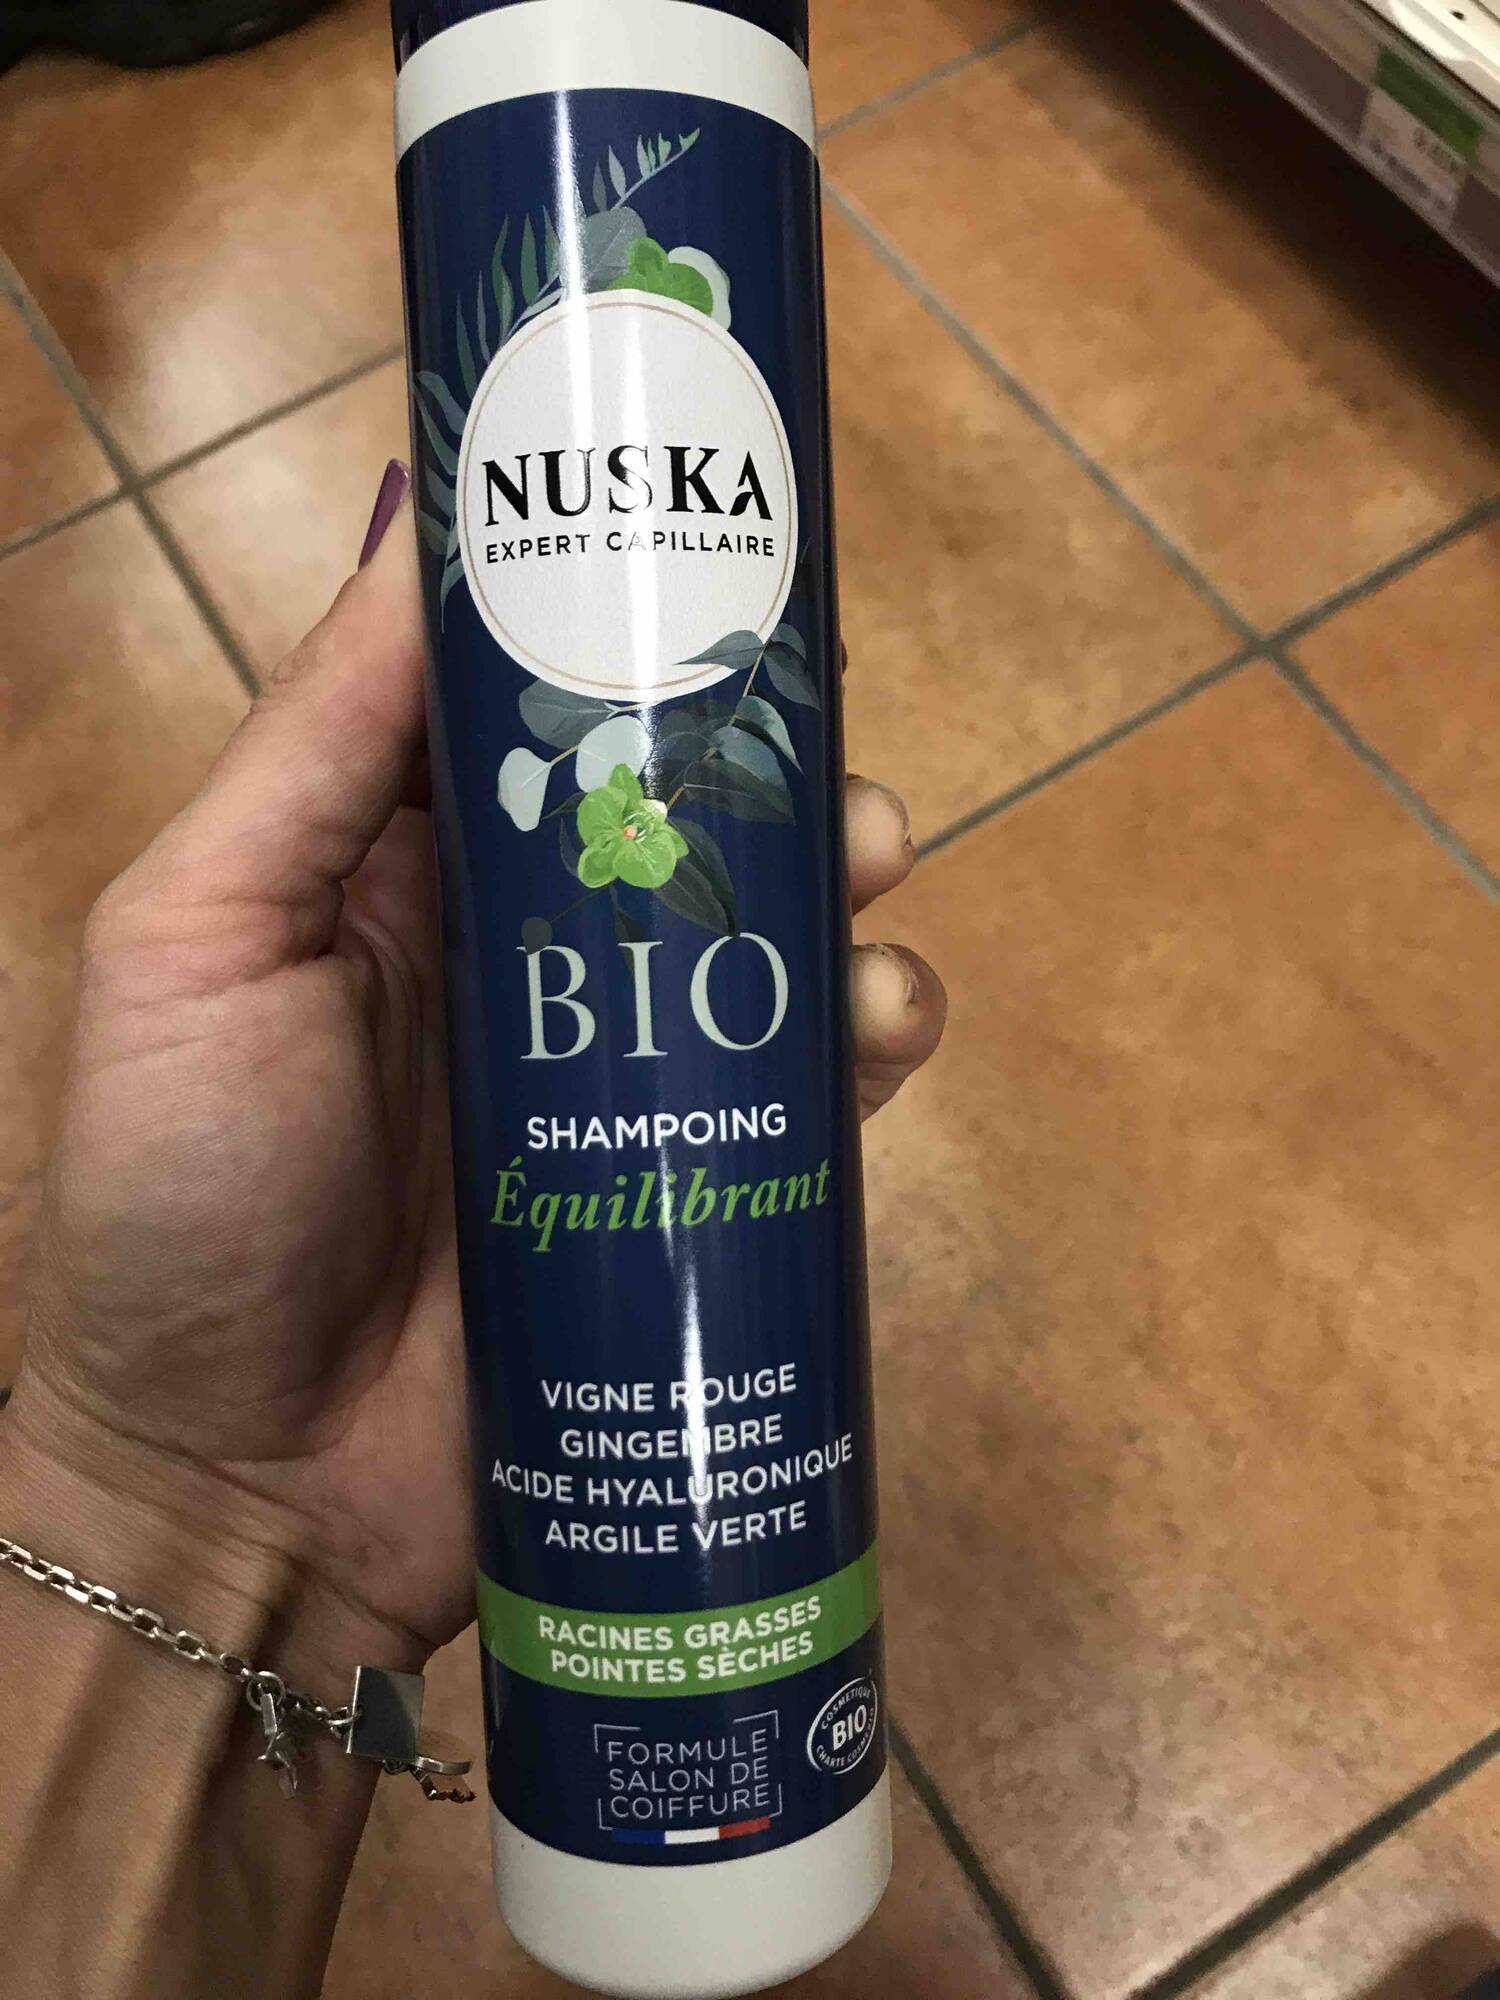 NUSKA - Bio shampoing équilibrant